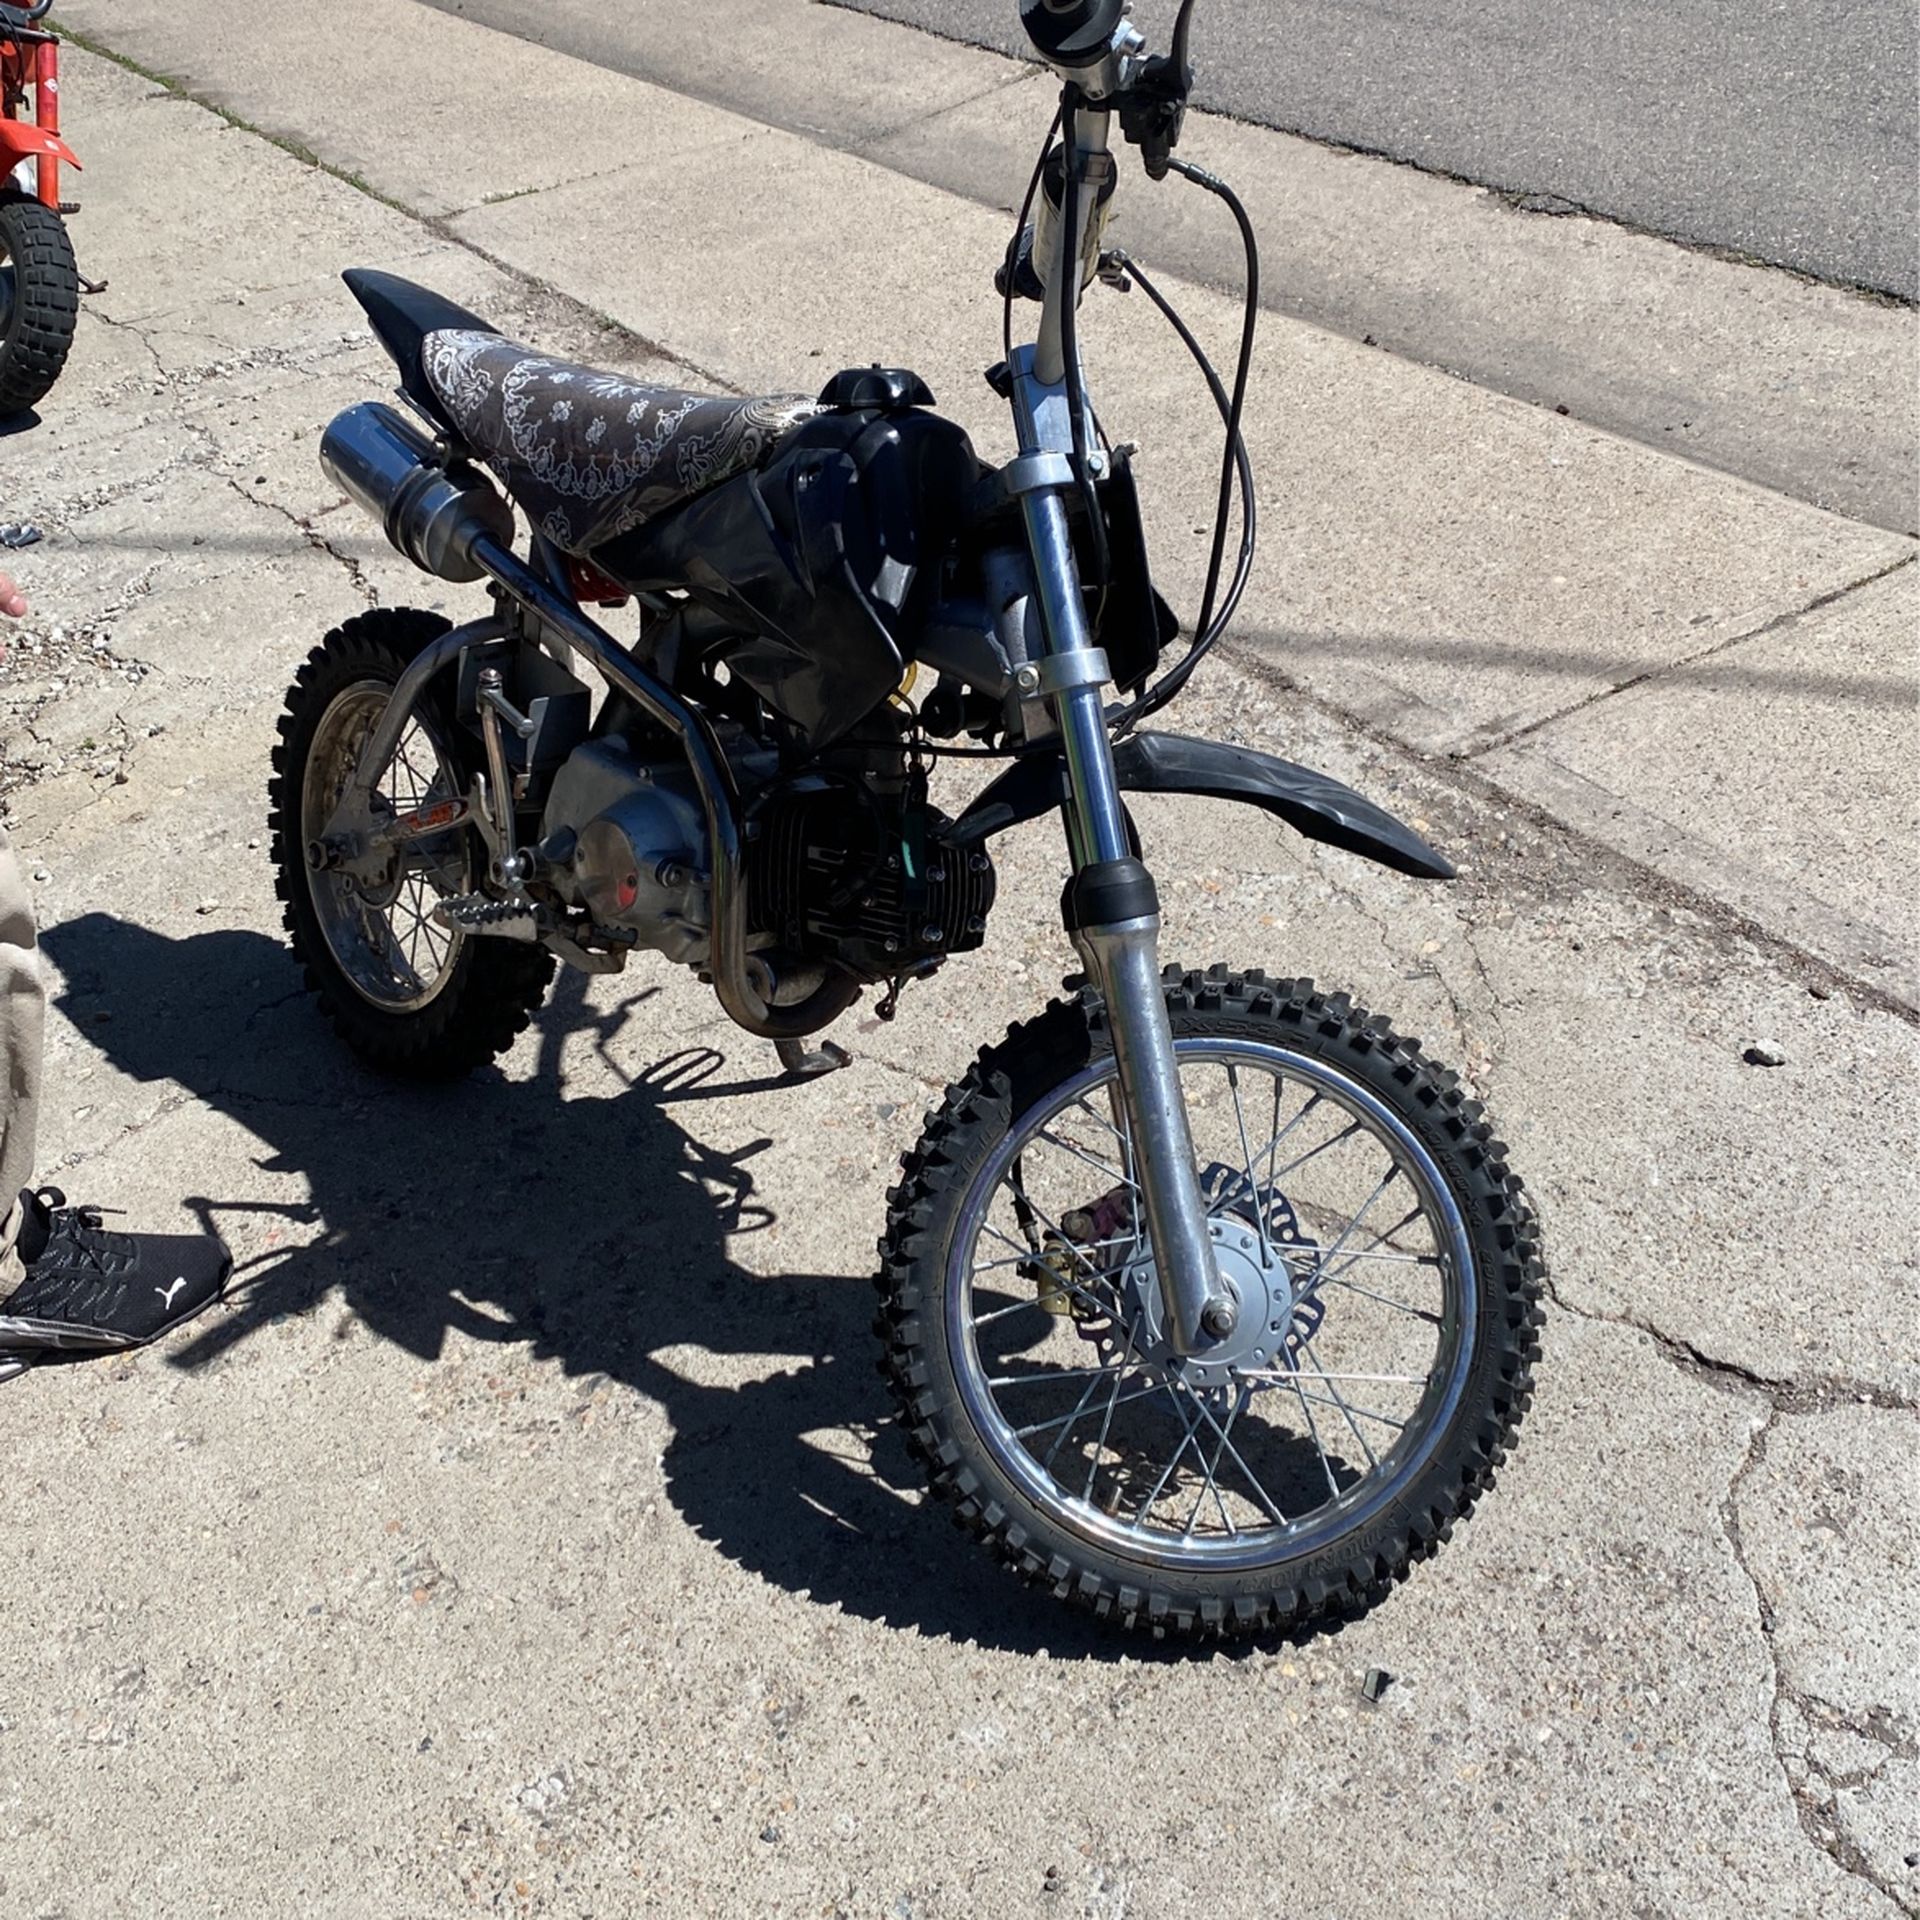 Dirt bike 150cc Runs Fine Looking To Trade For A Gokart OBO 